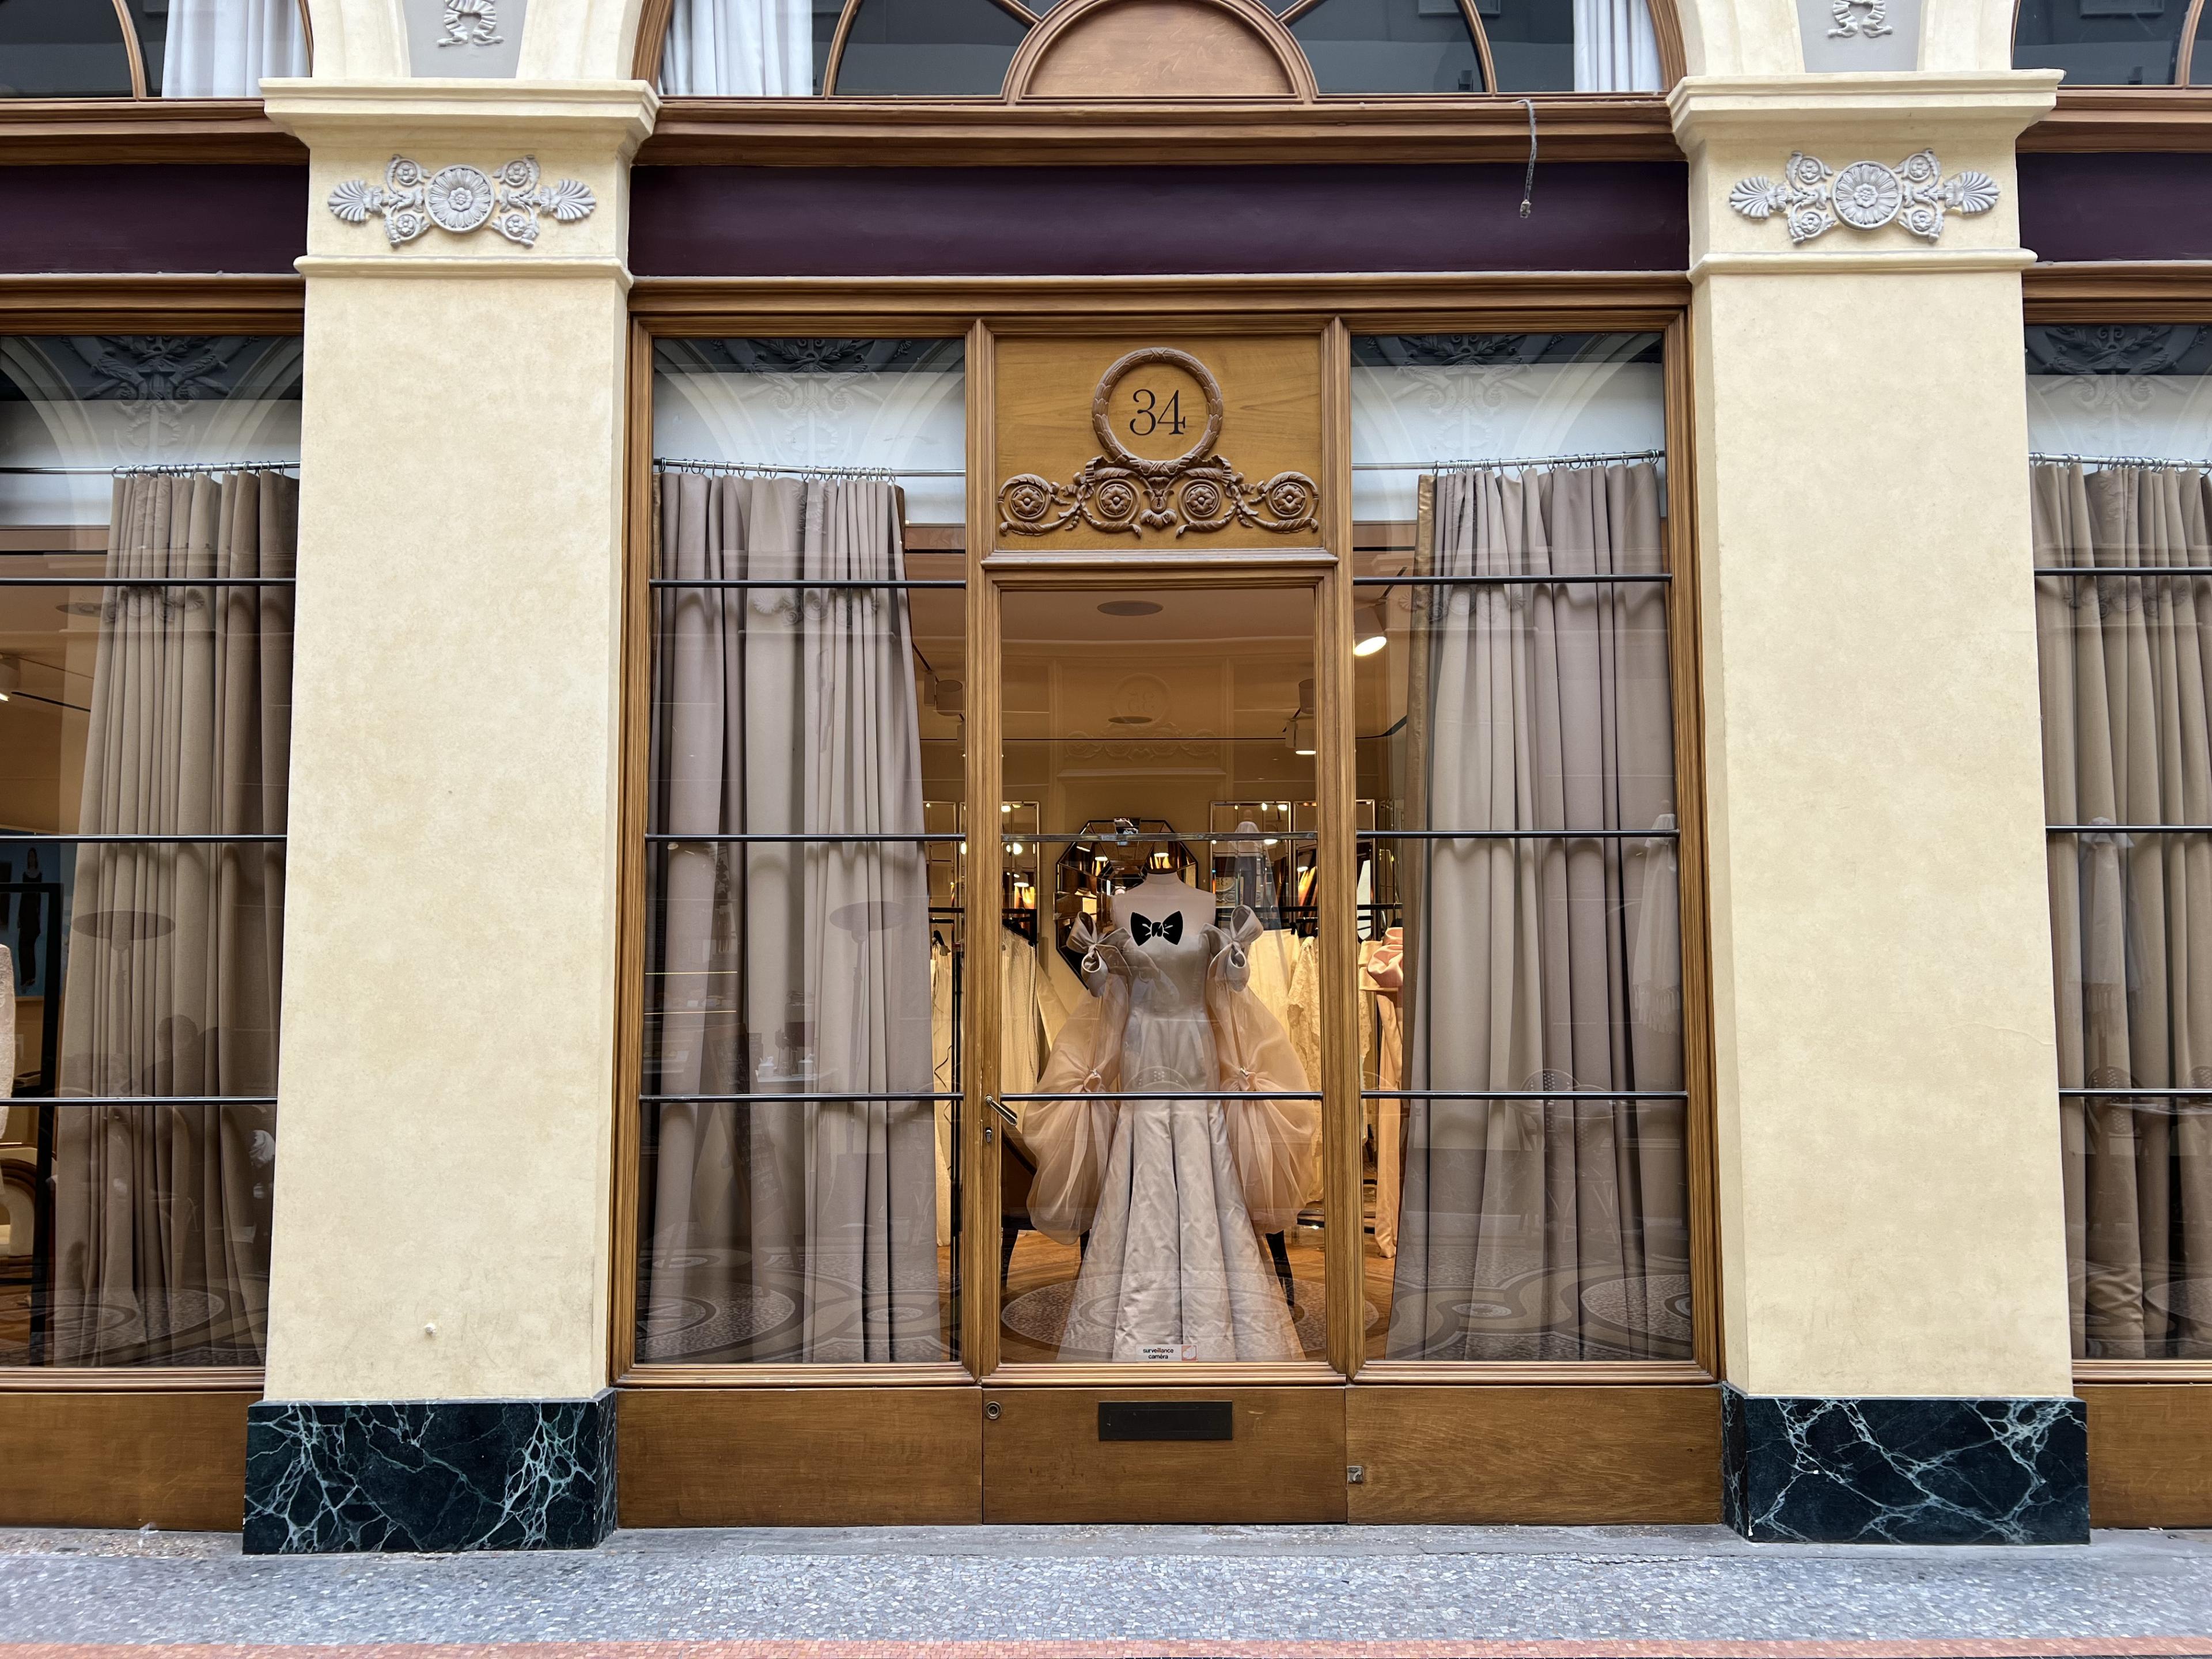 window display with a fancy dress and polished wood window frames